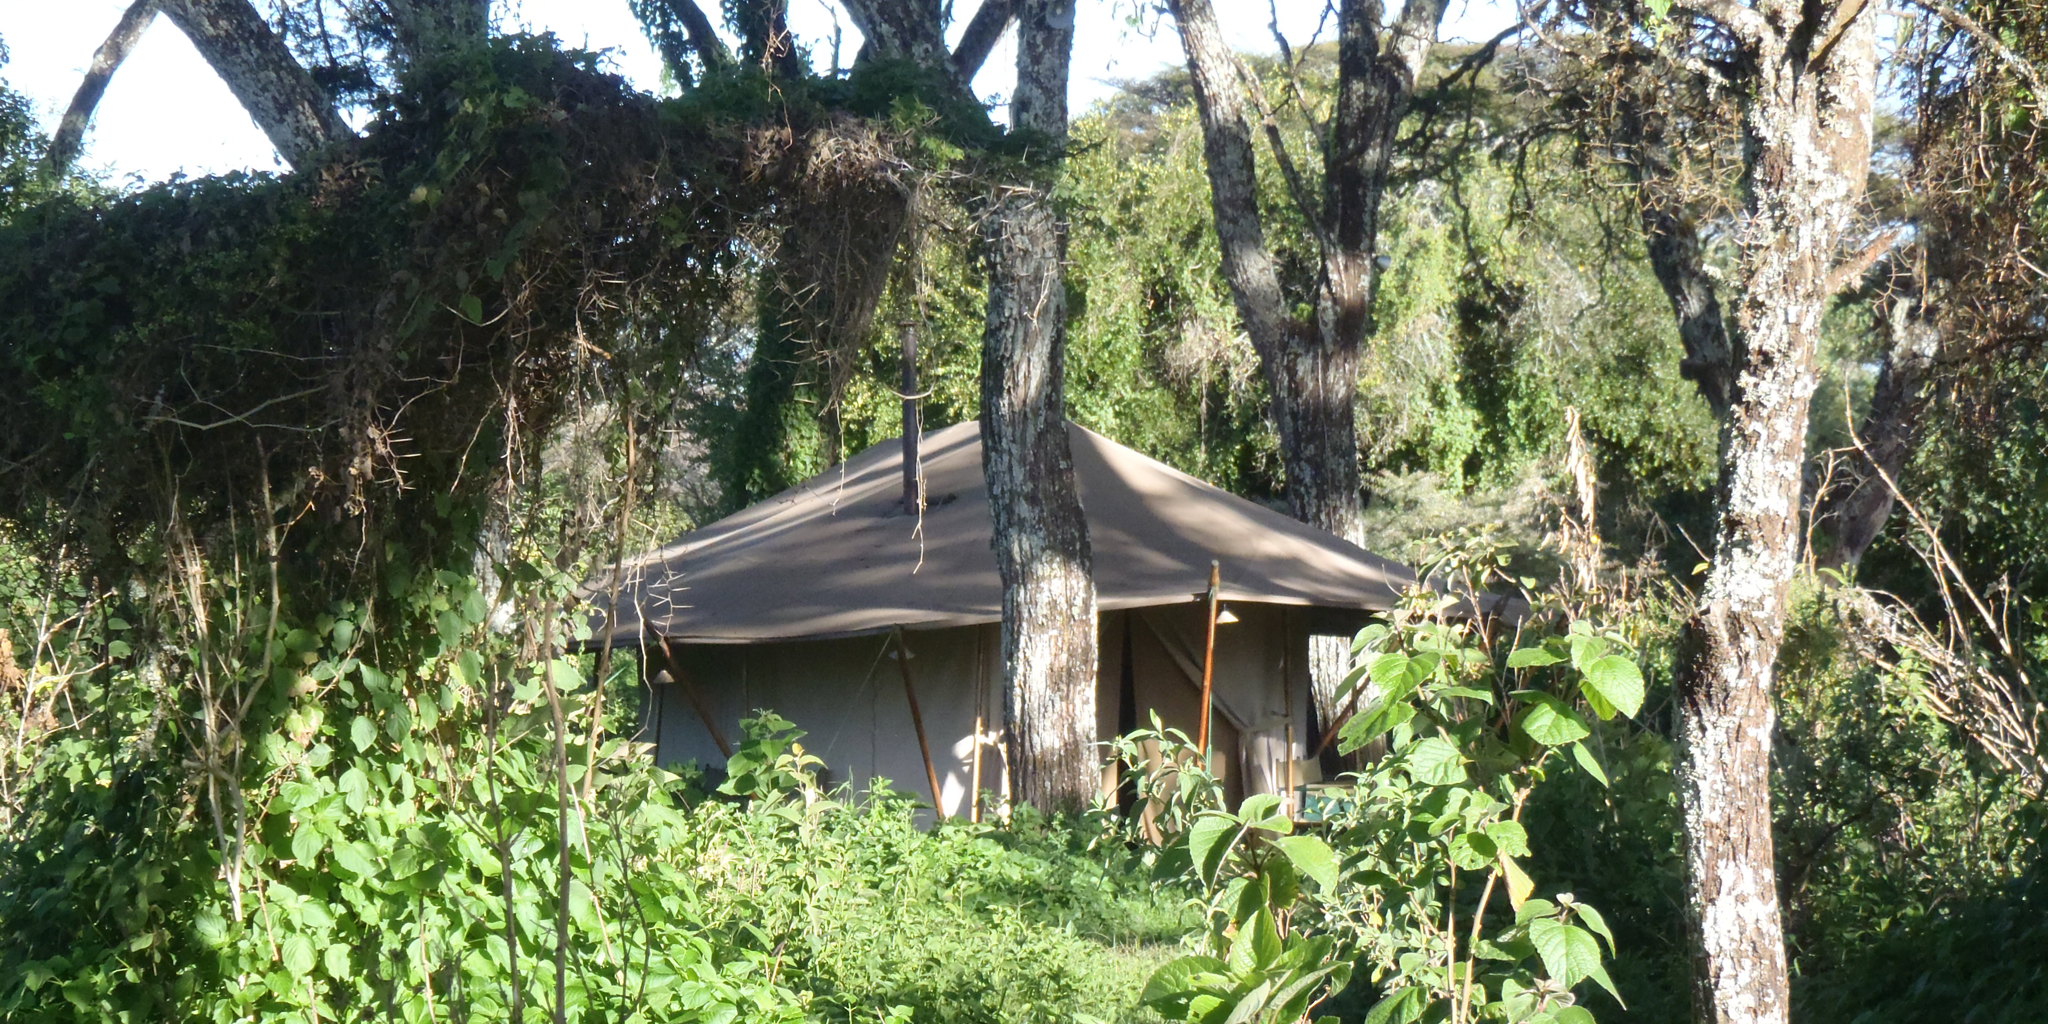 Ngorongoro Classic Green Camp, Tanzania